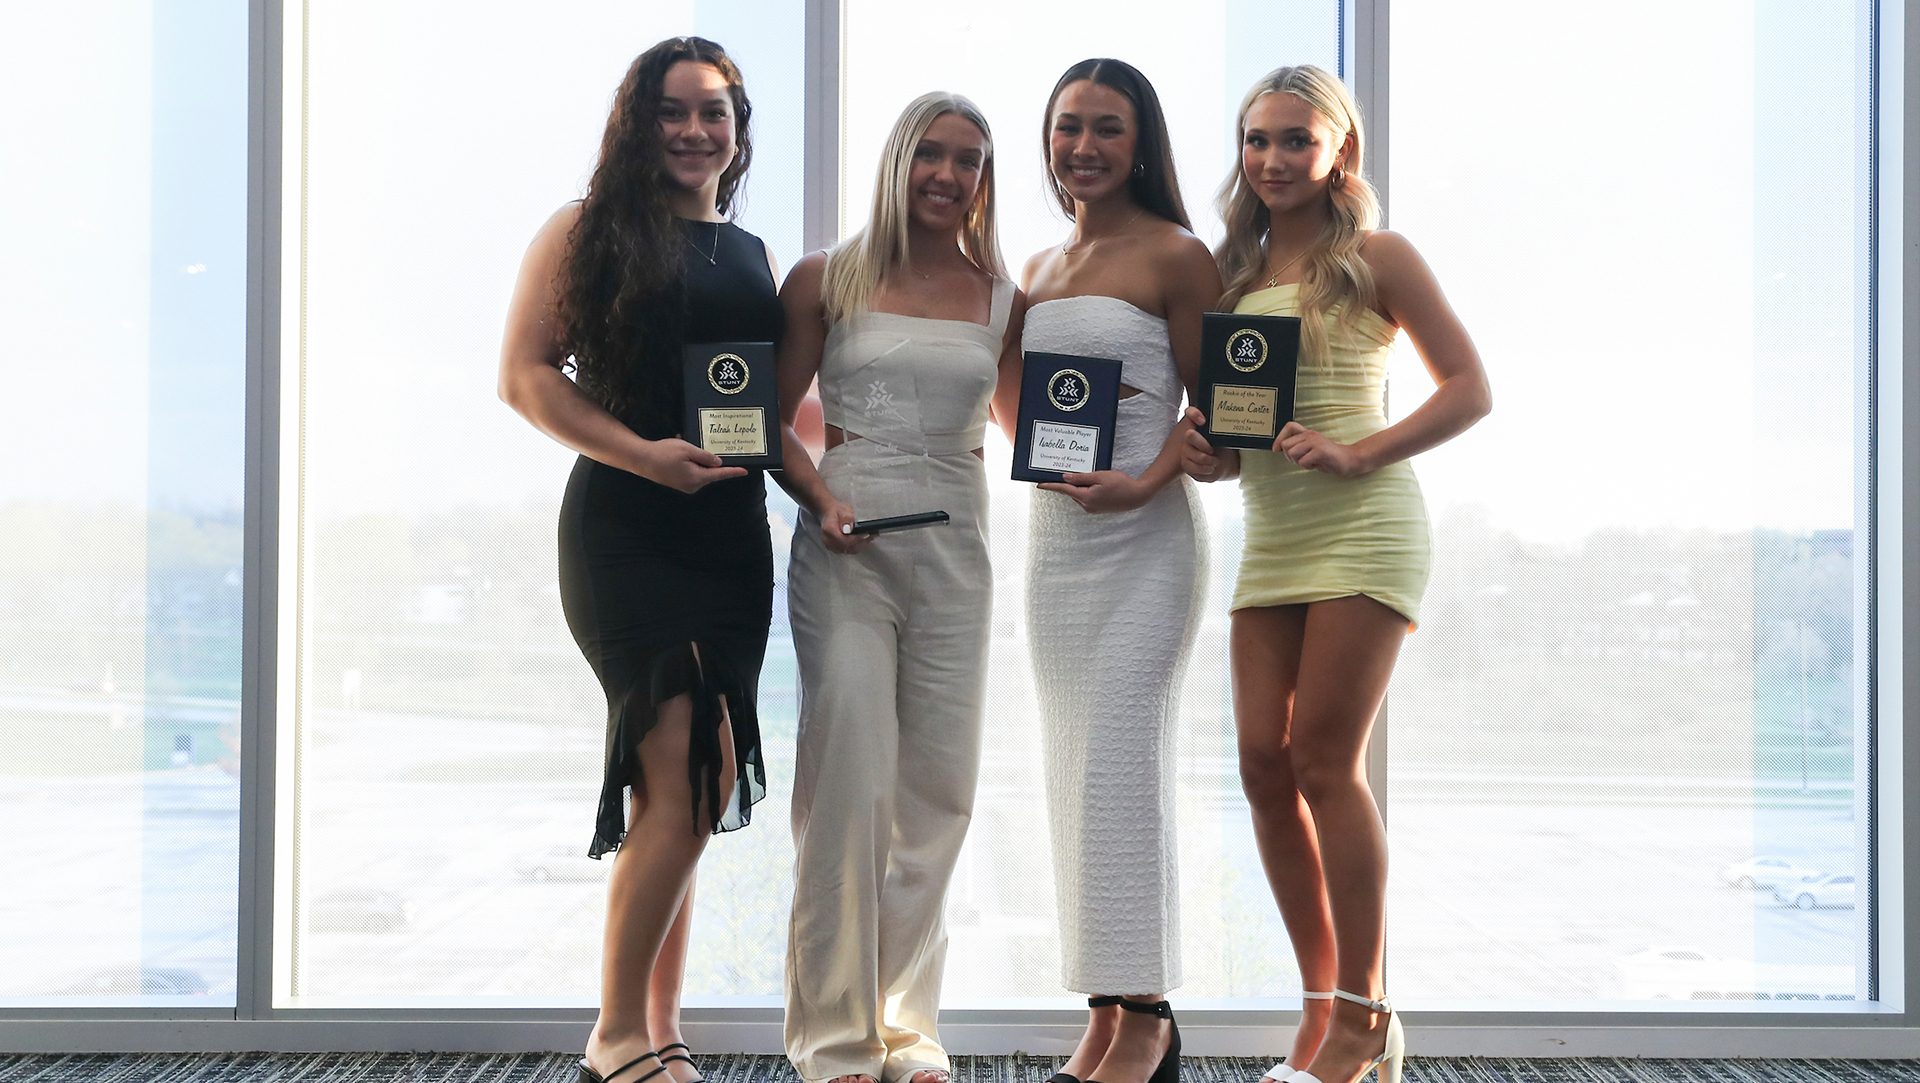 Four Members of Kentucky STUNT Team Earn National Awards